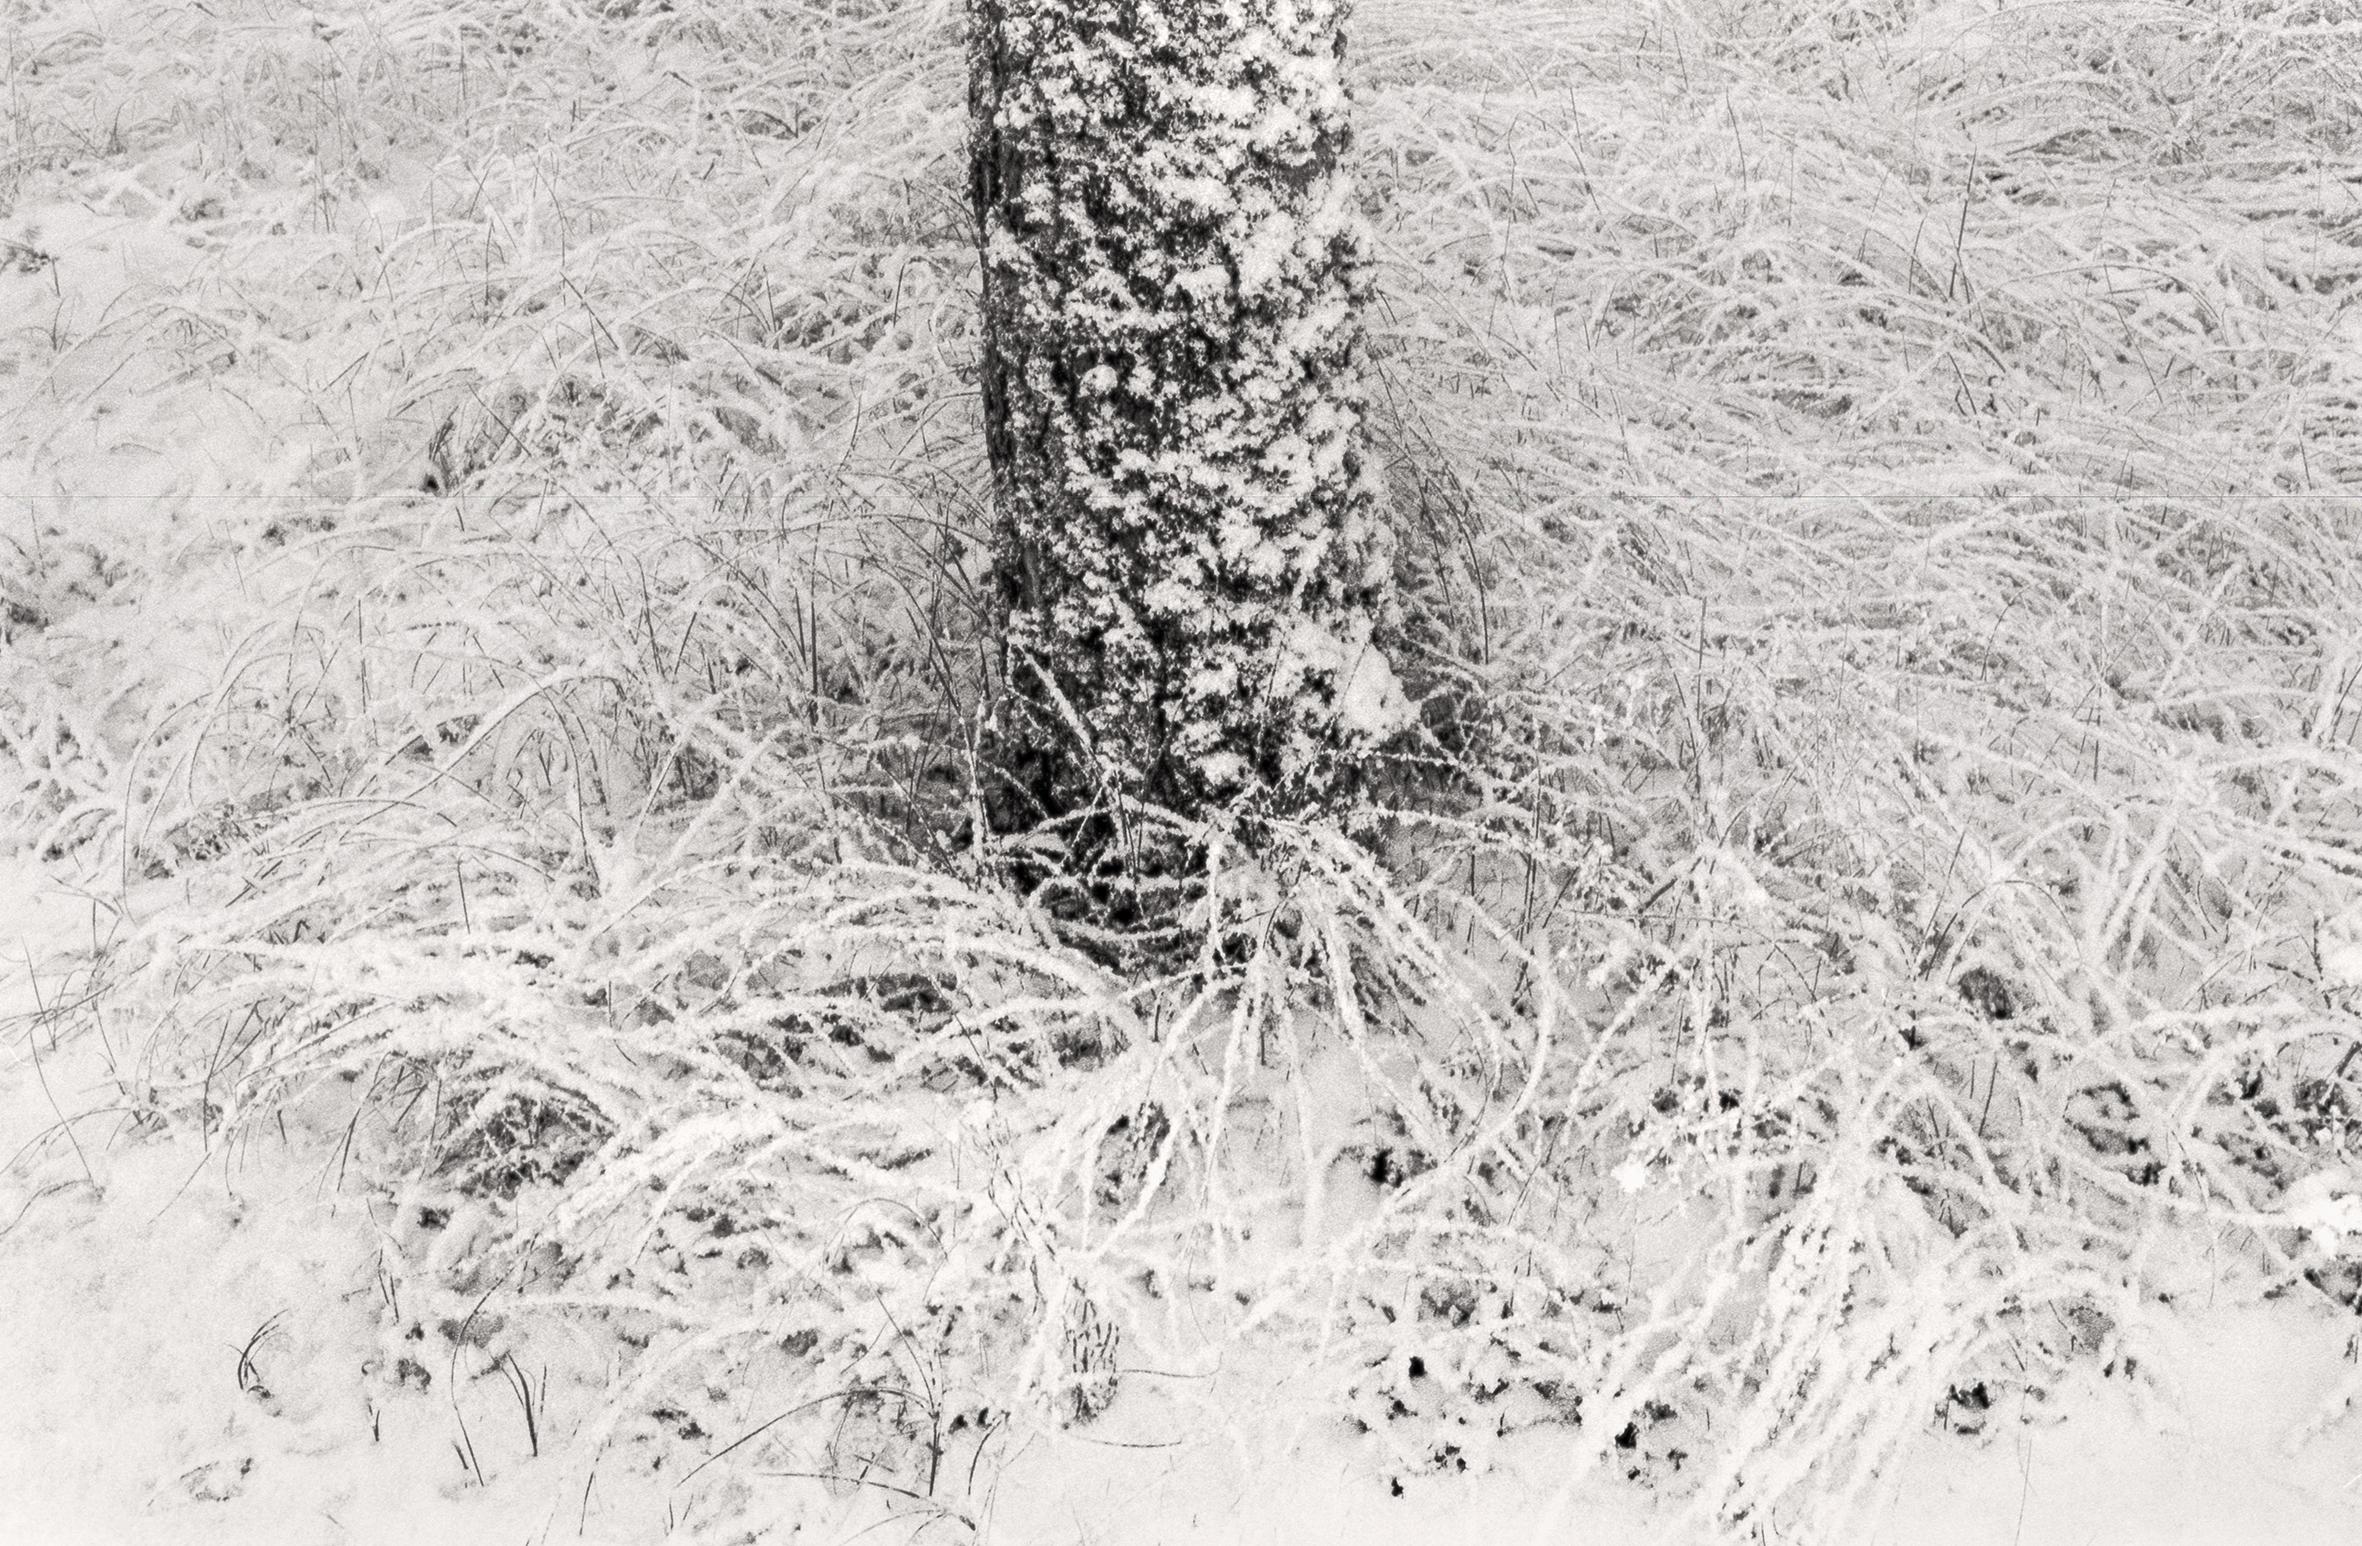 Ugne Pouwell Landscape Photograph - 'Baltic freeze #2' - black and white analogue landscape photography 100 x 65 cm